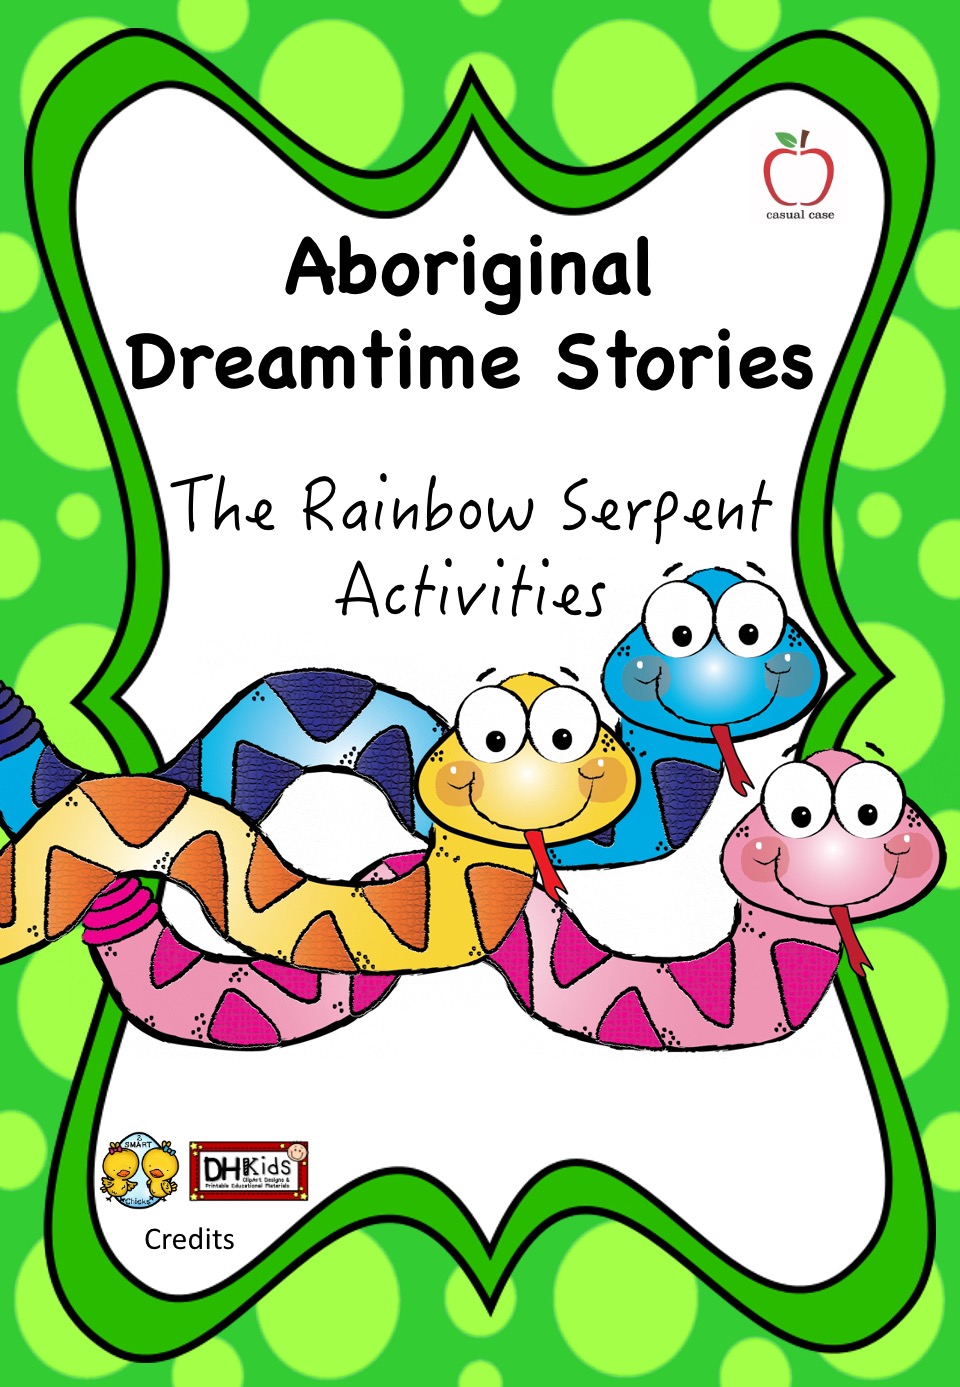 Aboriginal Dreamtime Stories - The Rainbow Serpent » Casual Case